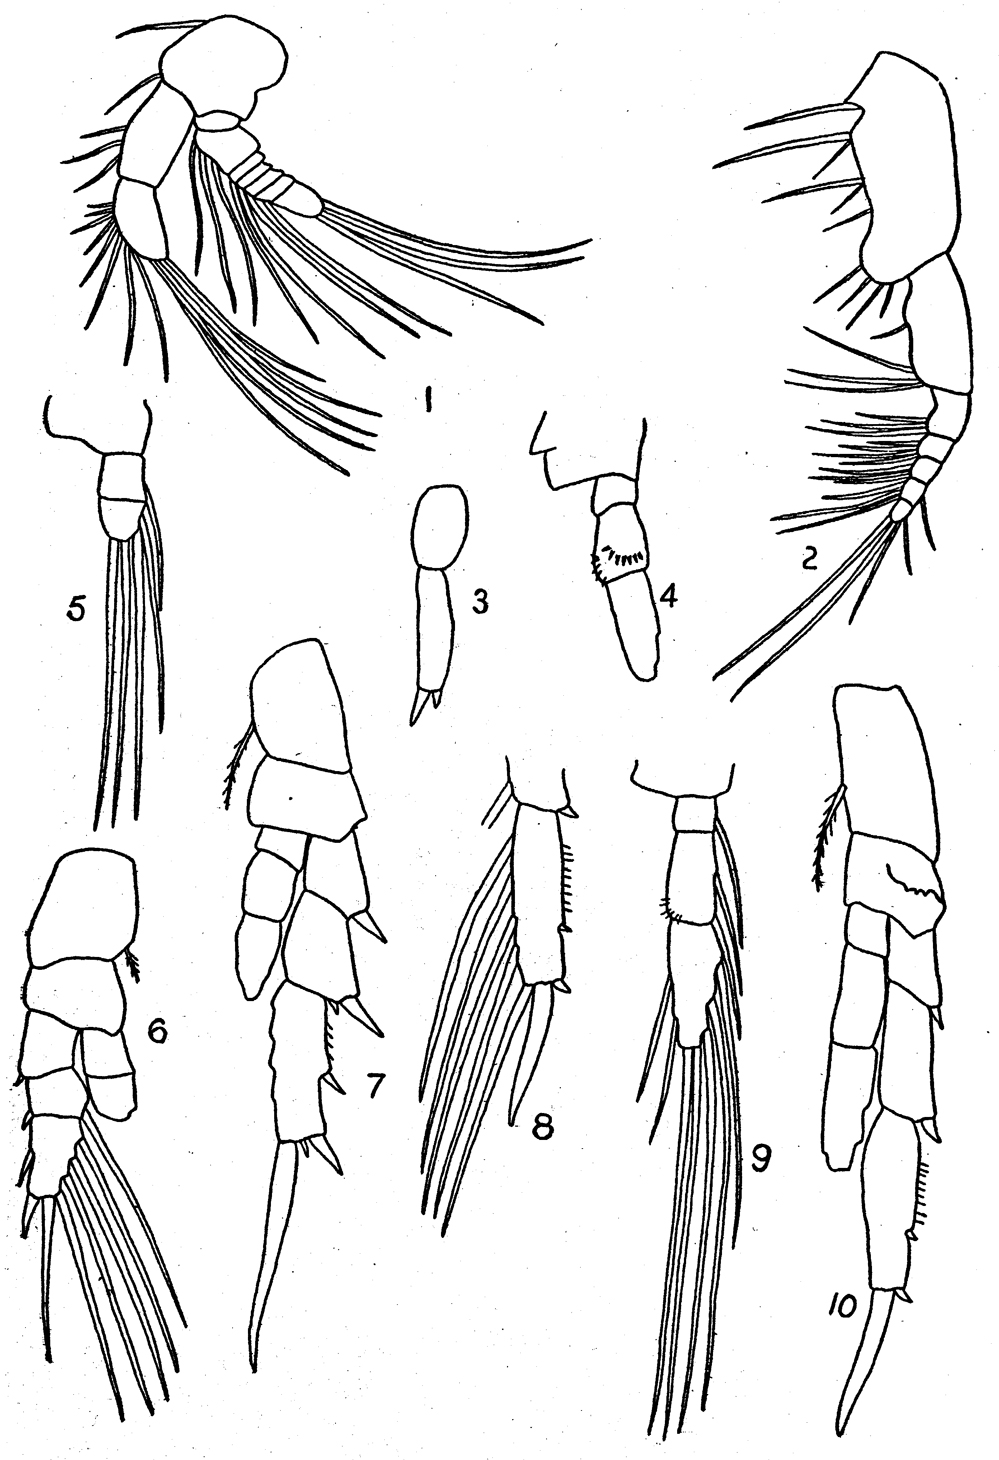 Species Parvocalanus crassirostris - Plate 17 of morphological figures